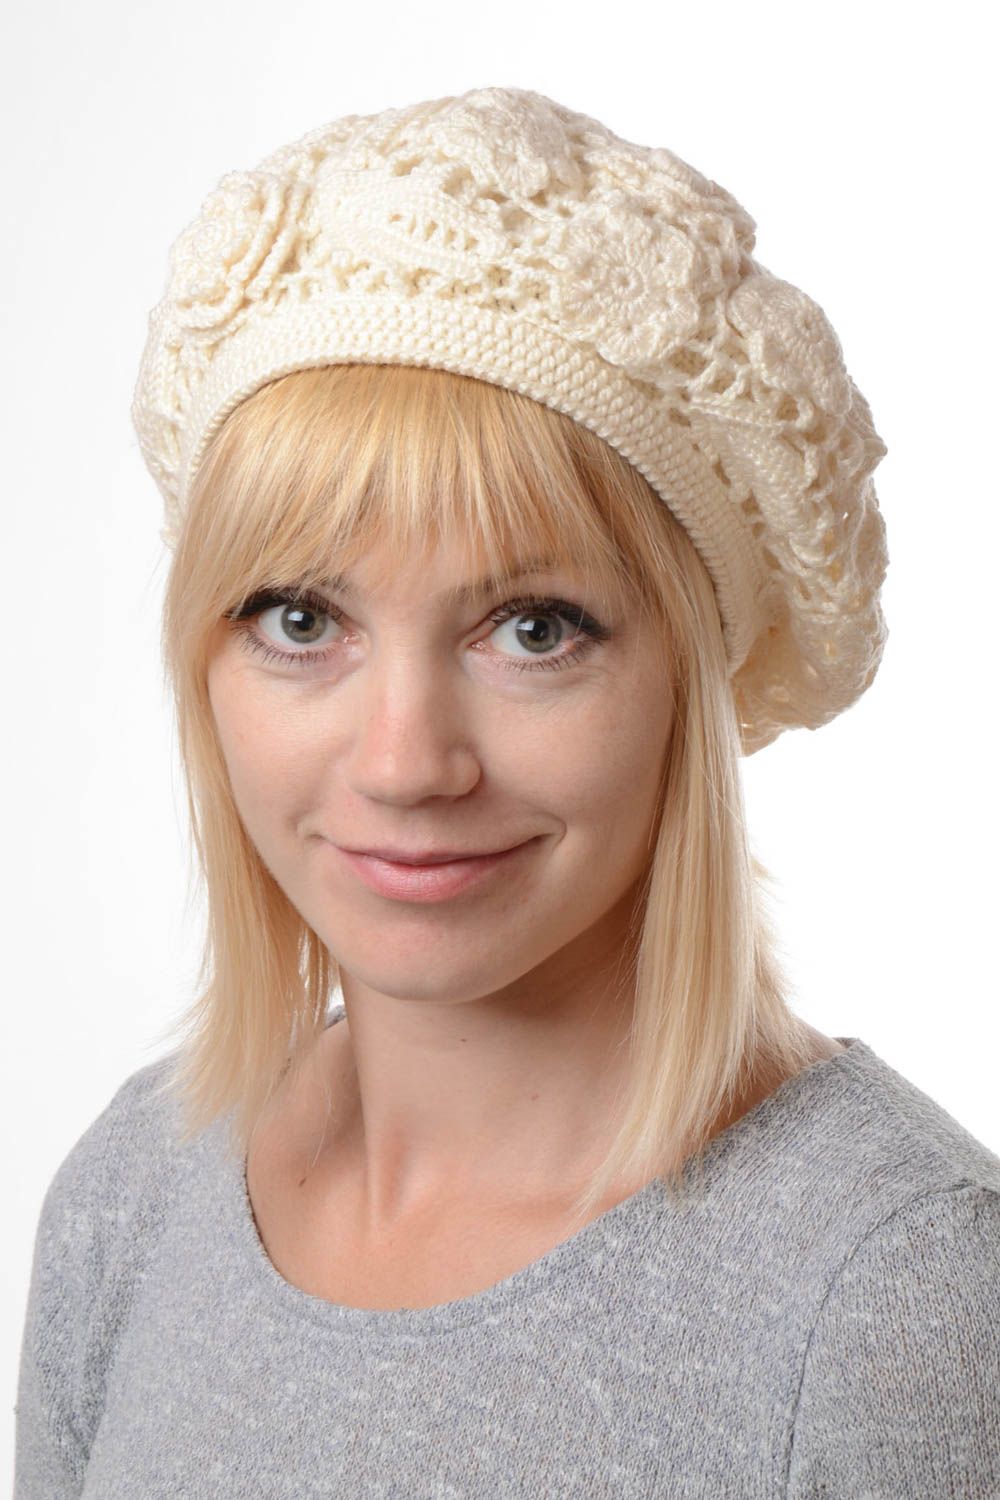 Handmade hat knitted hat designer hat unusual gift hat for women warm hat photo 1